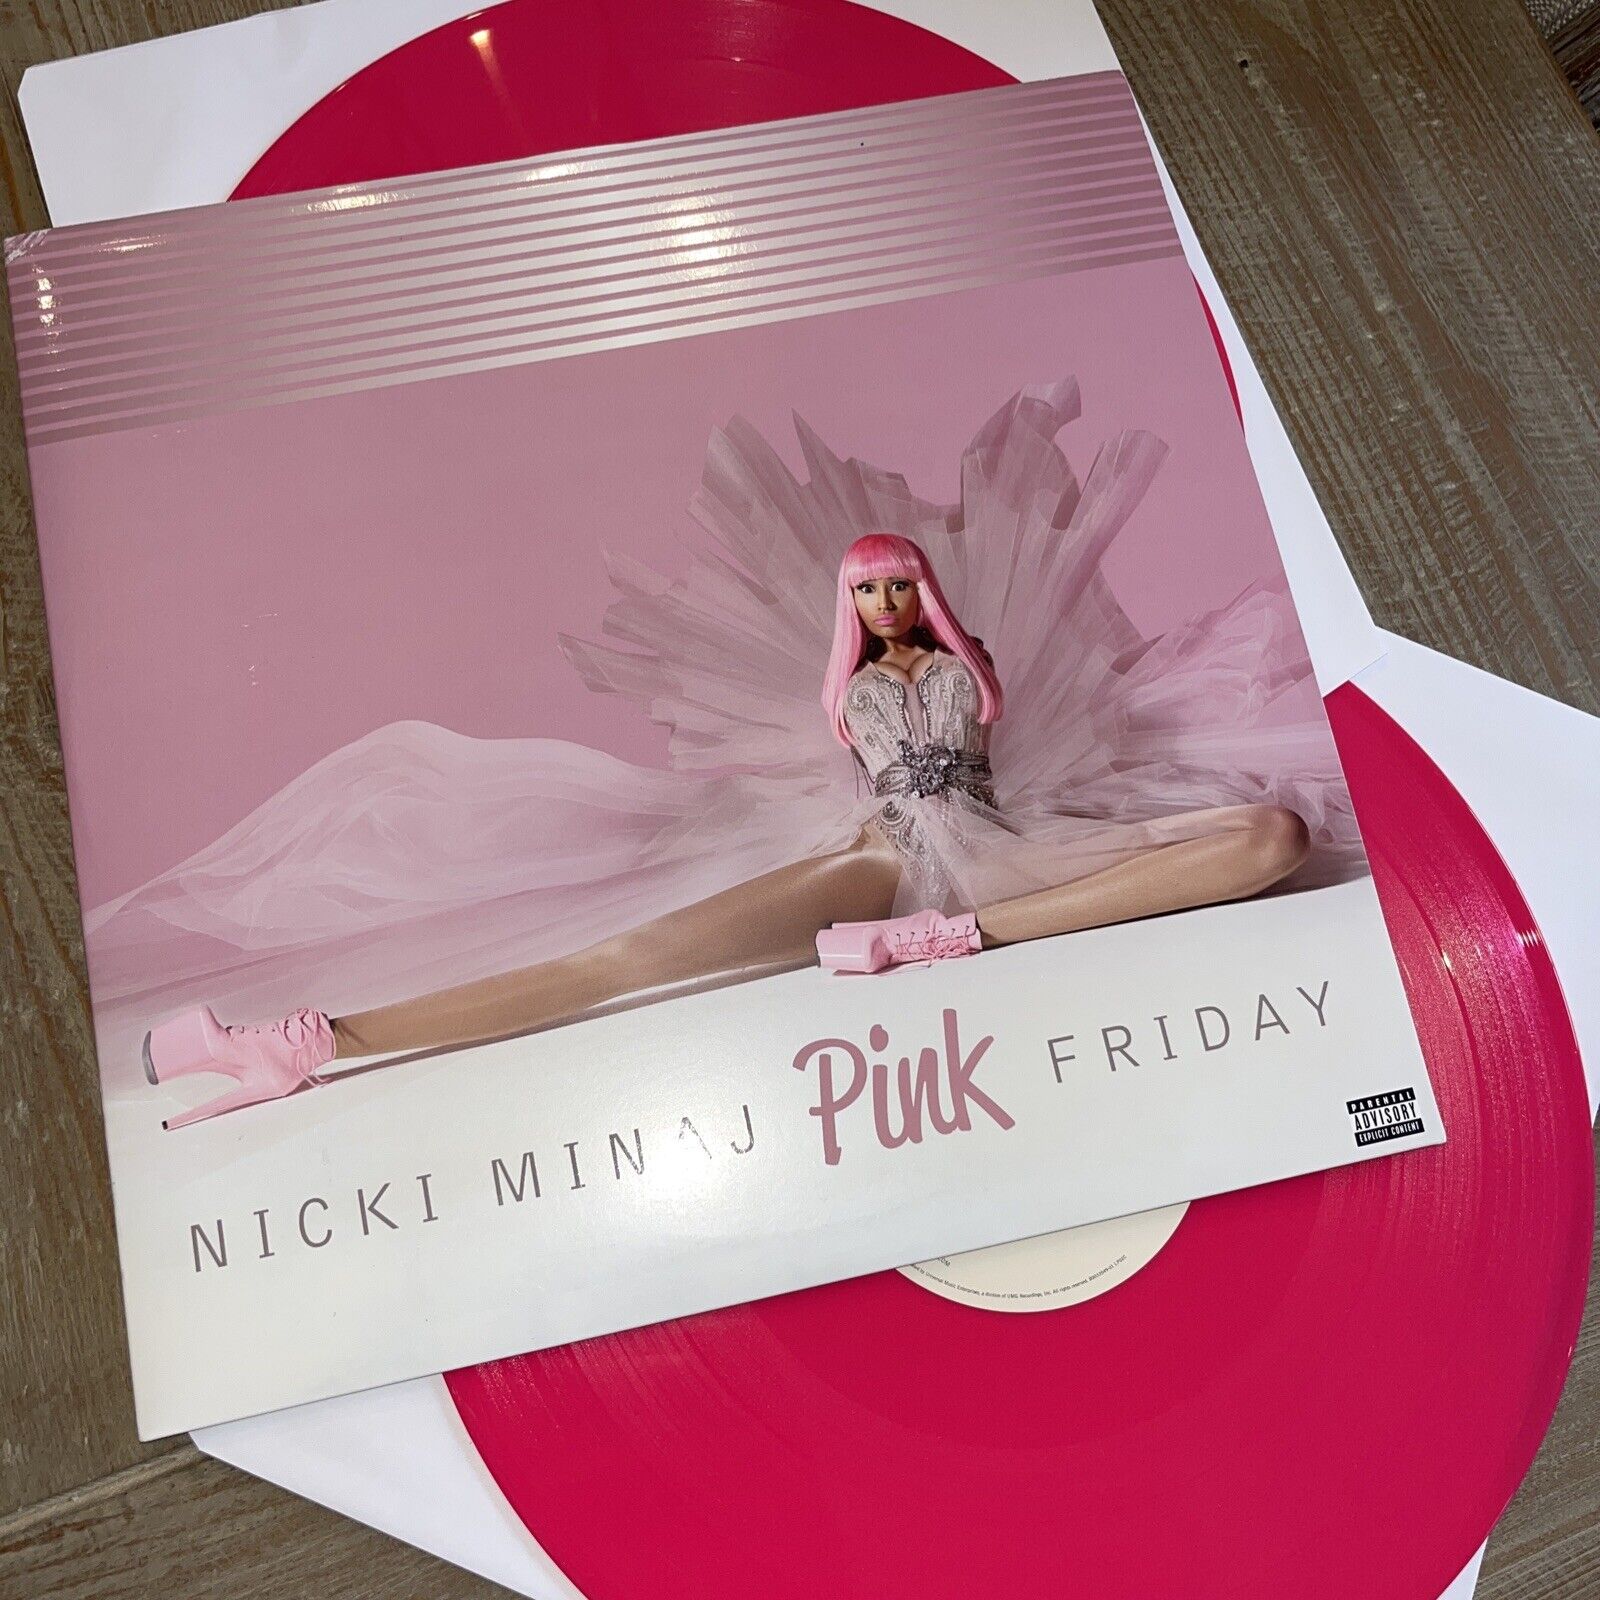 Nicki Minaj - Pink Friday (10th Anniversary) [New Vinyl LP] Explicit, Pink, Colo